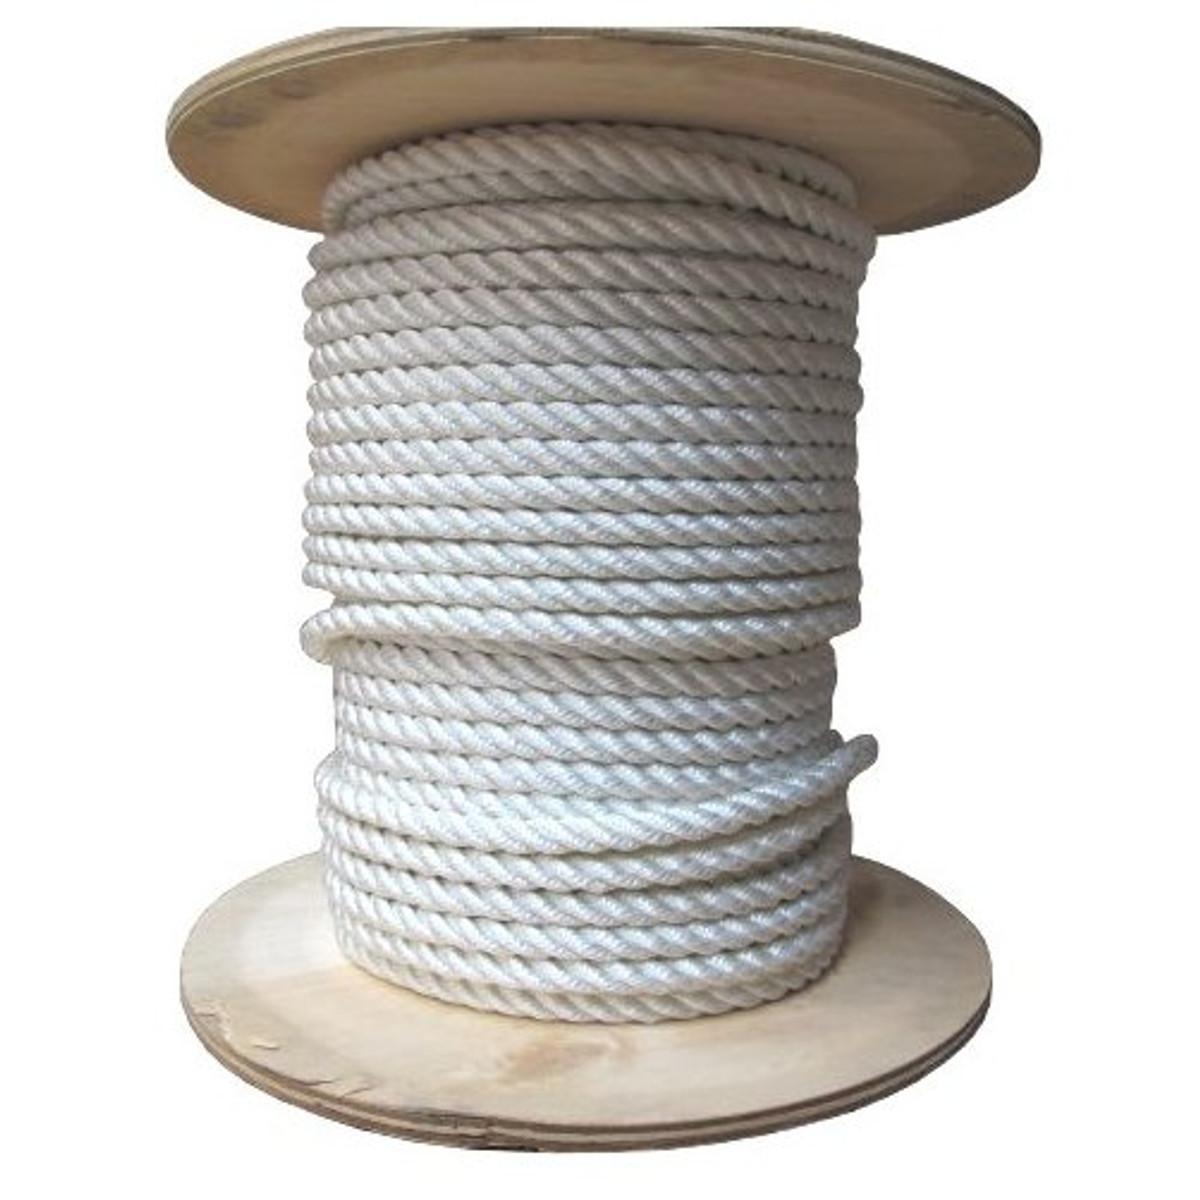 1/4 Nylon Rope (Per ft.) - Safe Work Load 124 lbs - Greschlers Hardware